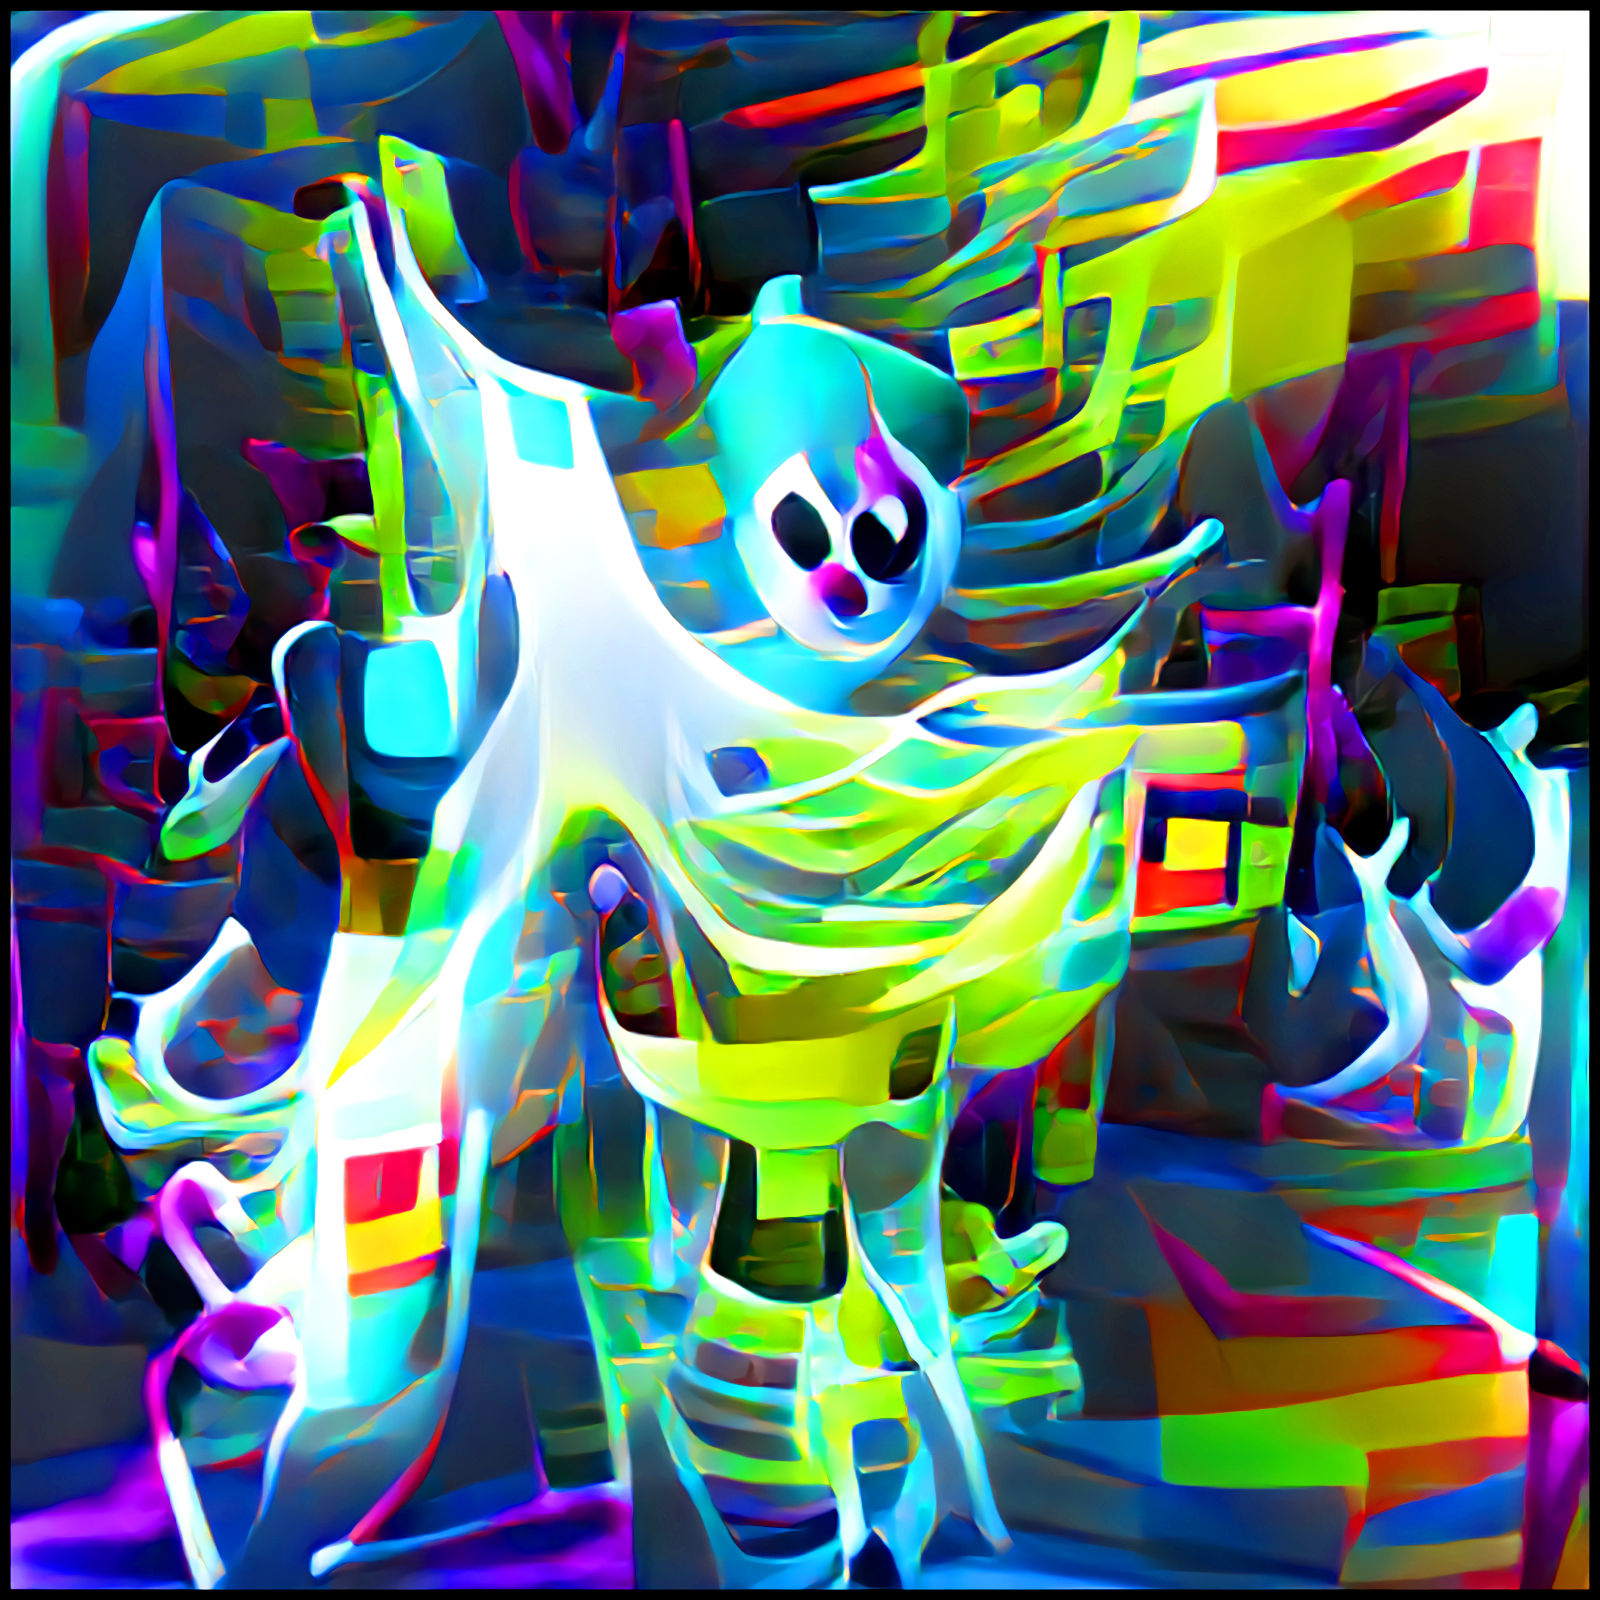 Artist Ghost